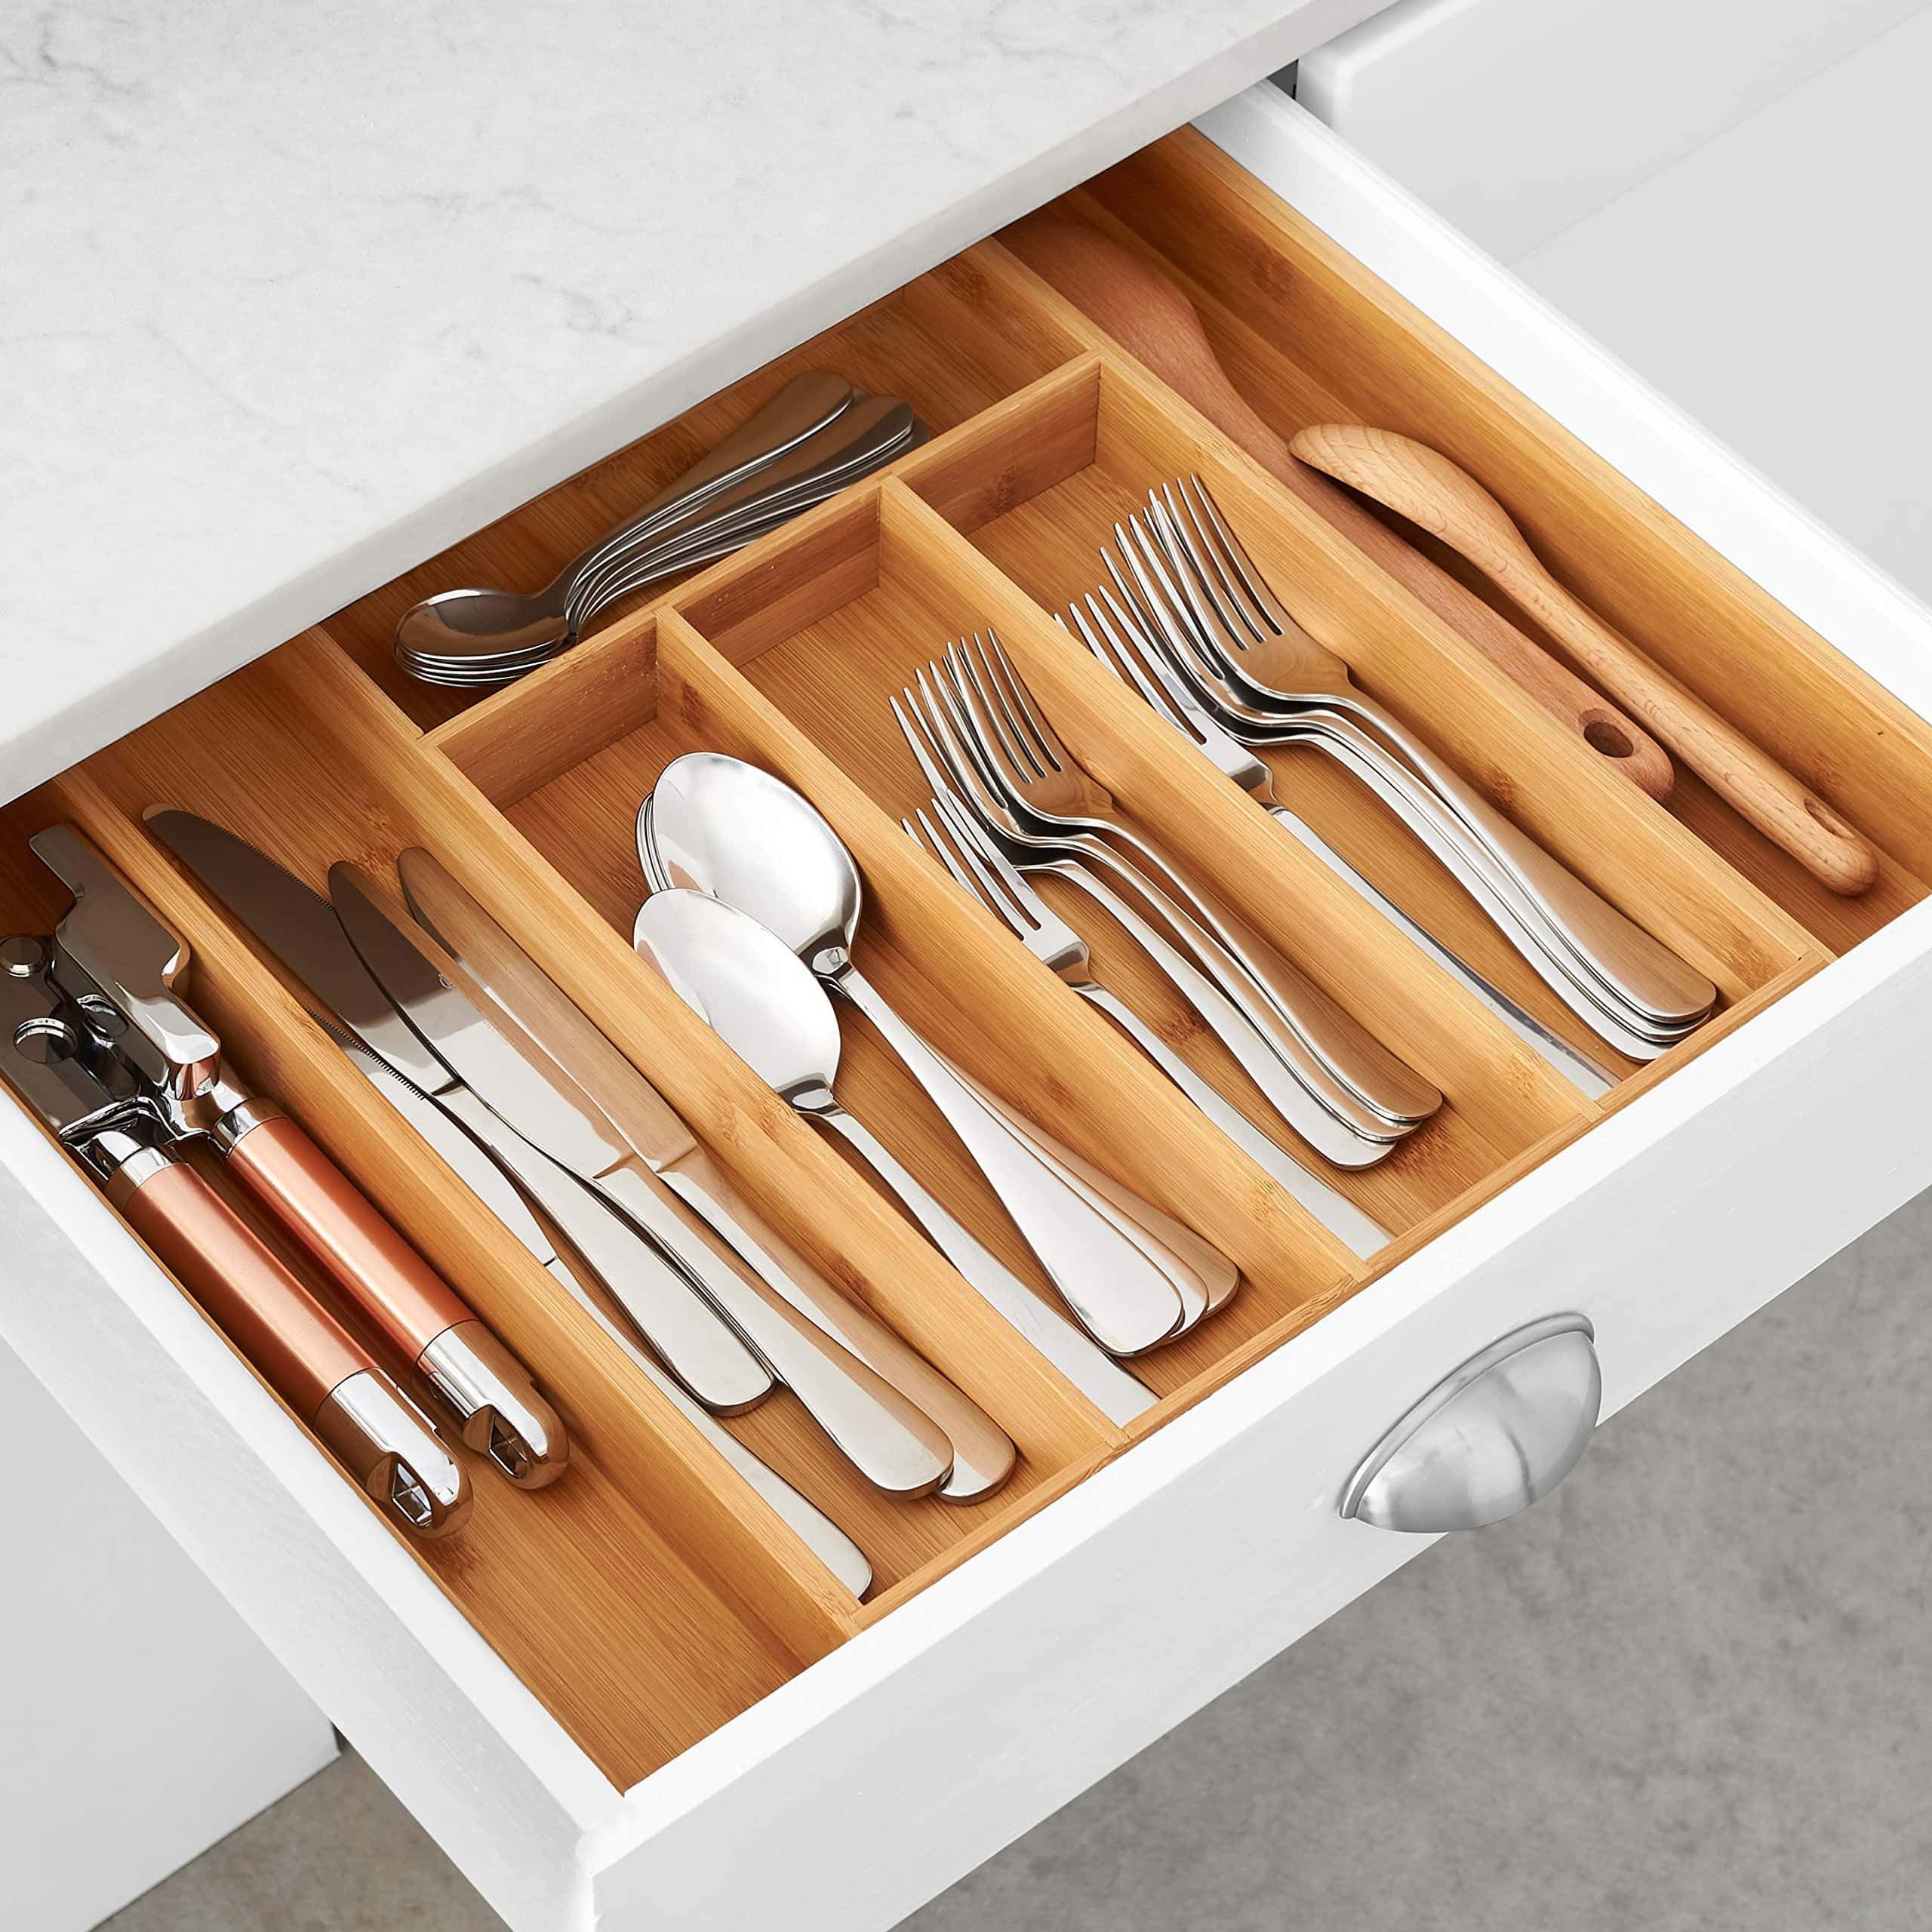 Order now amazonbasics bamboo expandable kitchen utensils drawer organizer